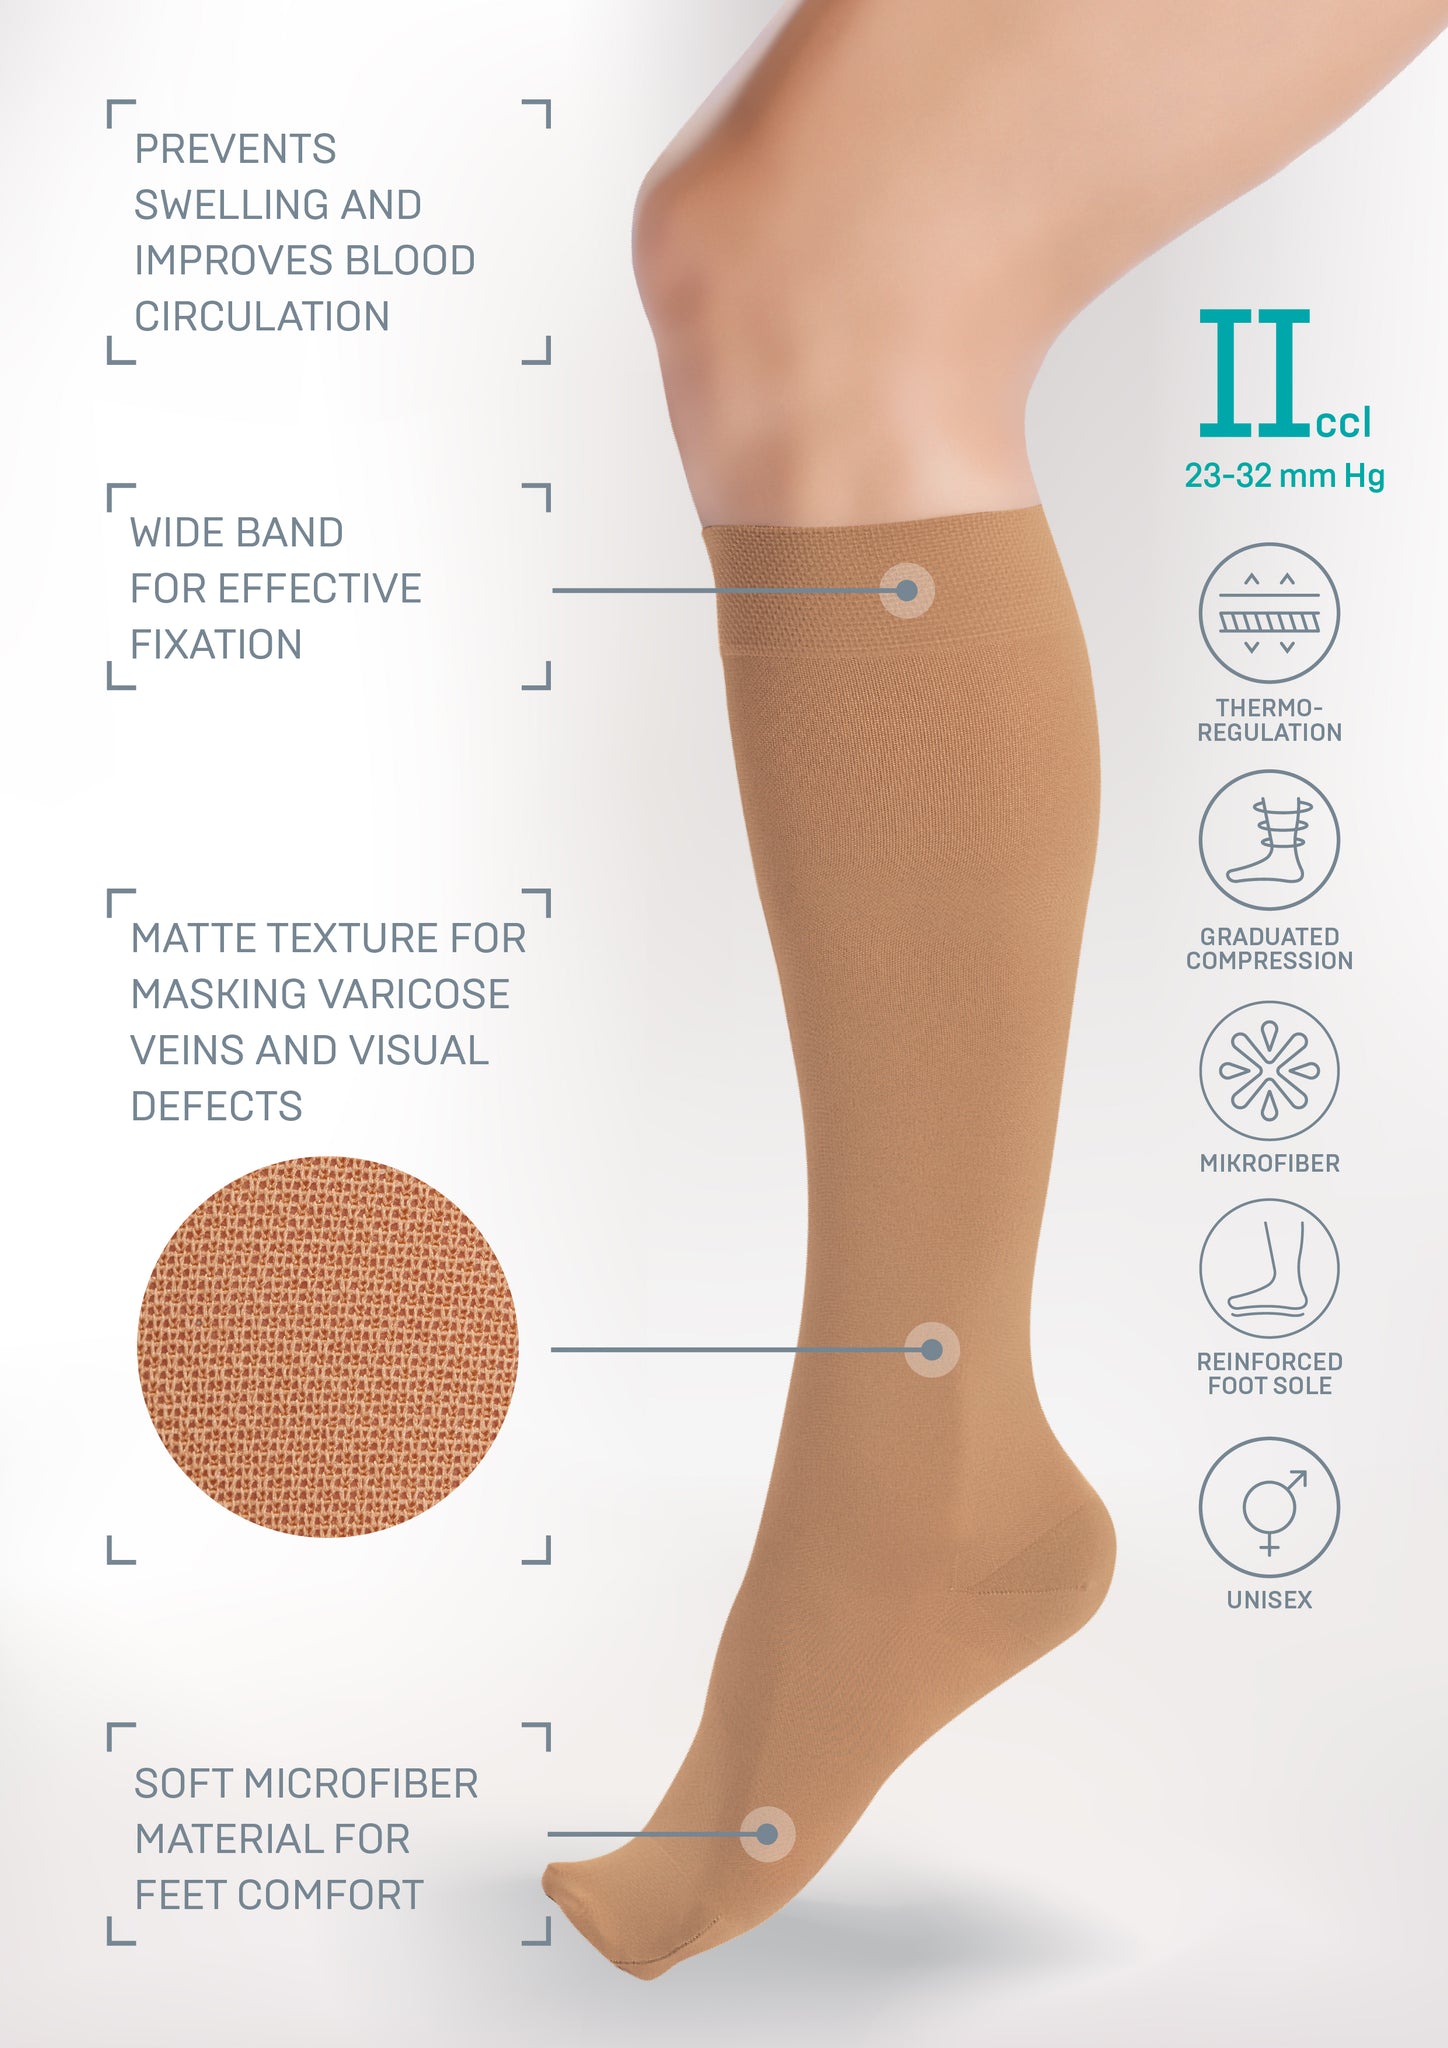 Tonus Elast Knee-High Medical Compression Stockings - Closed Toe